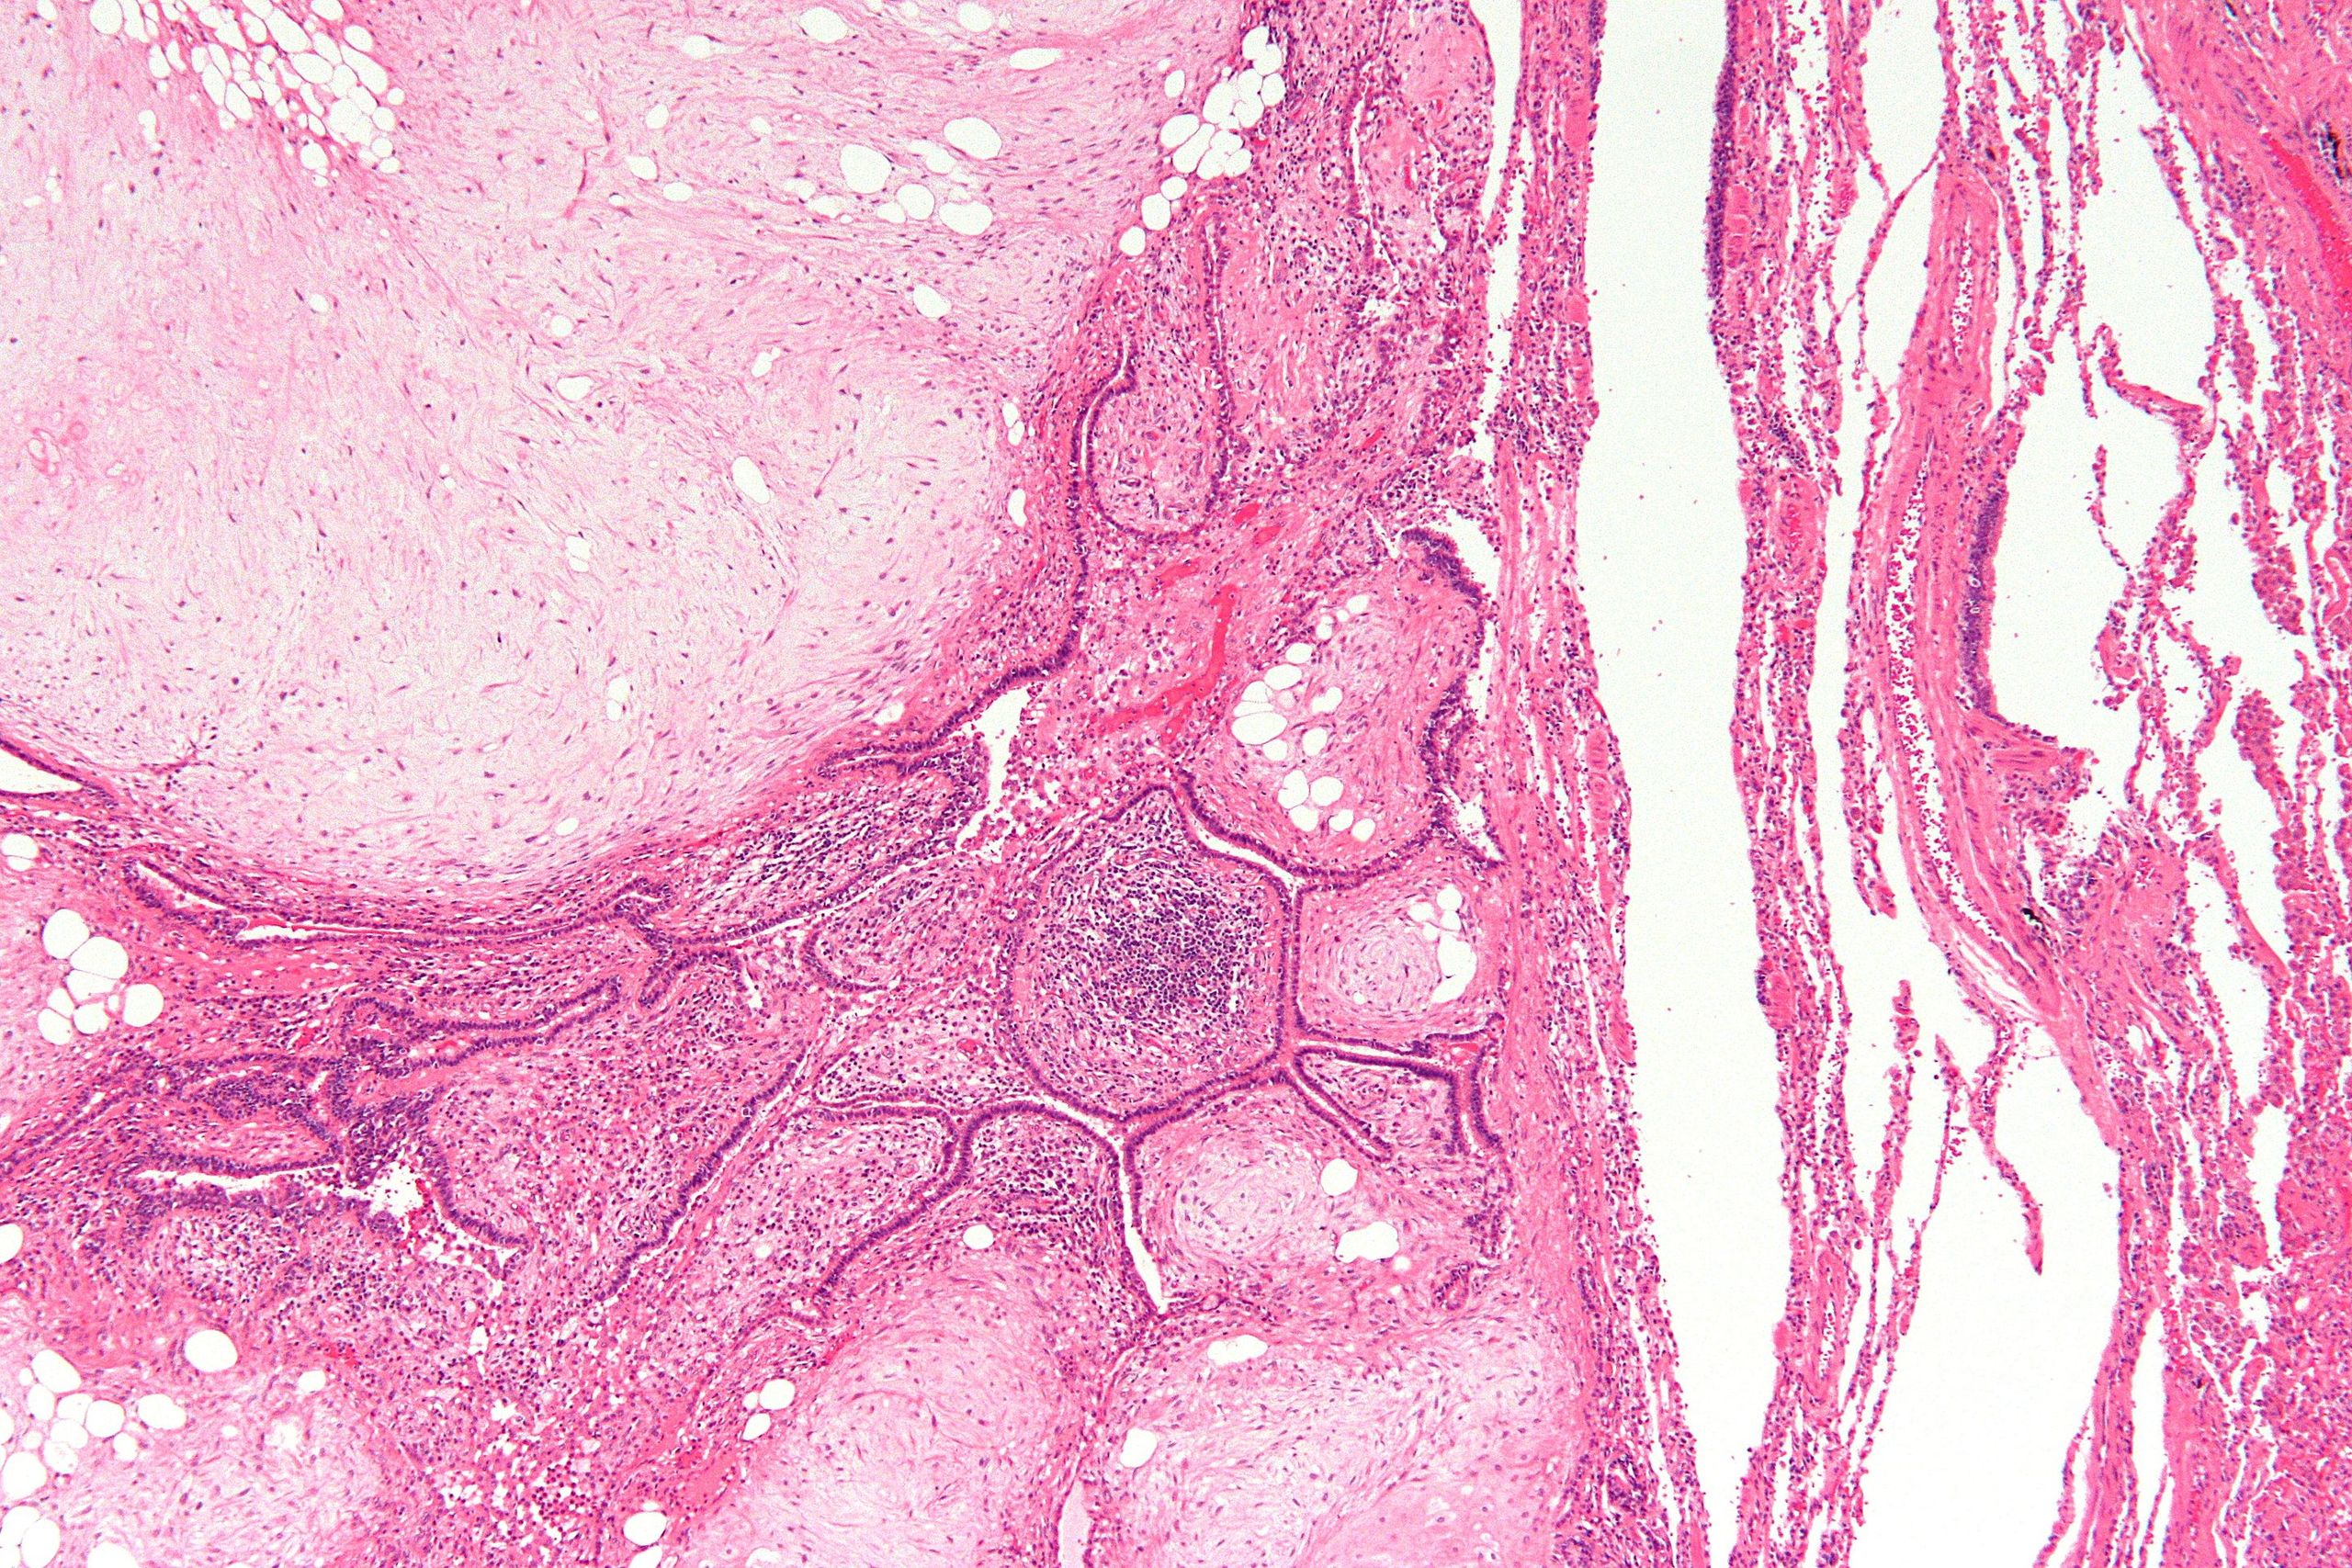 Low magnification micrograph of a pulmonary hamartoma. H&E stain.[6]